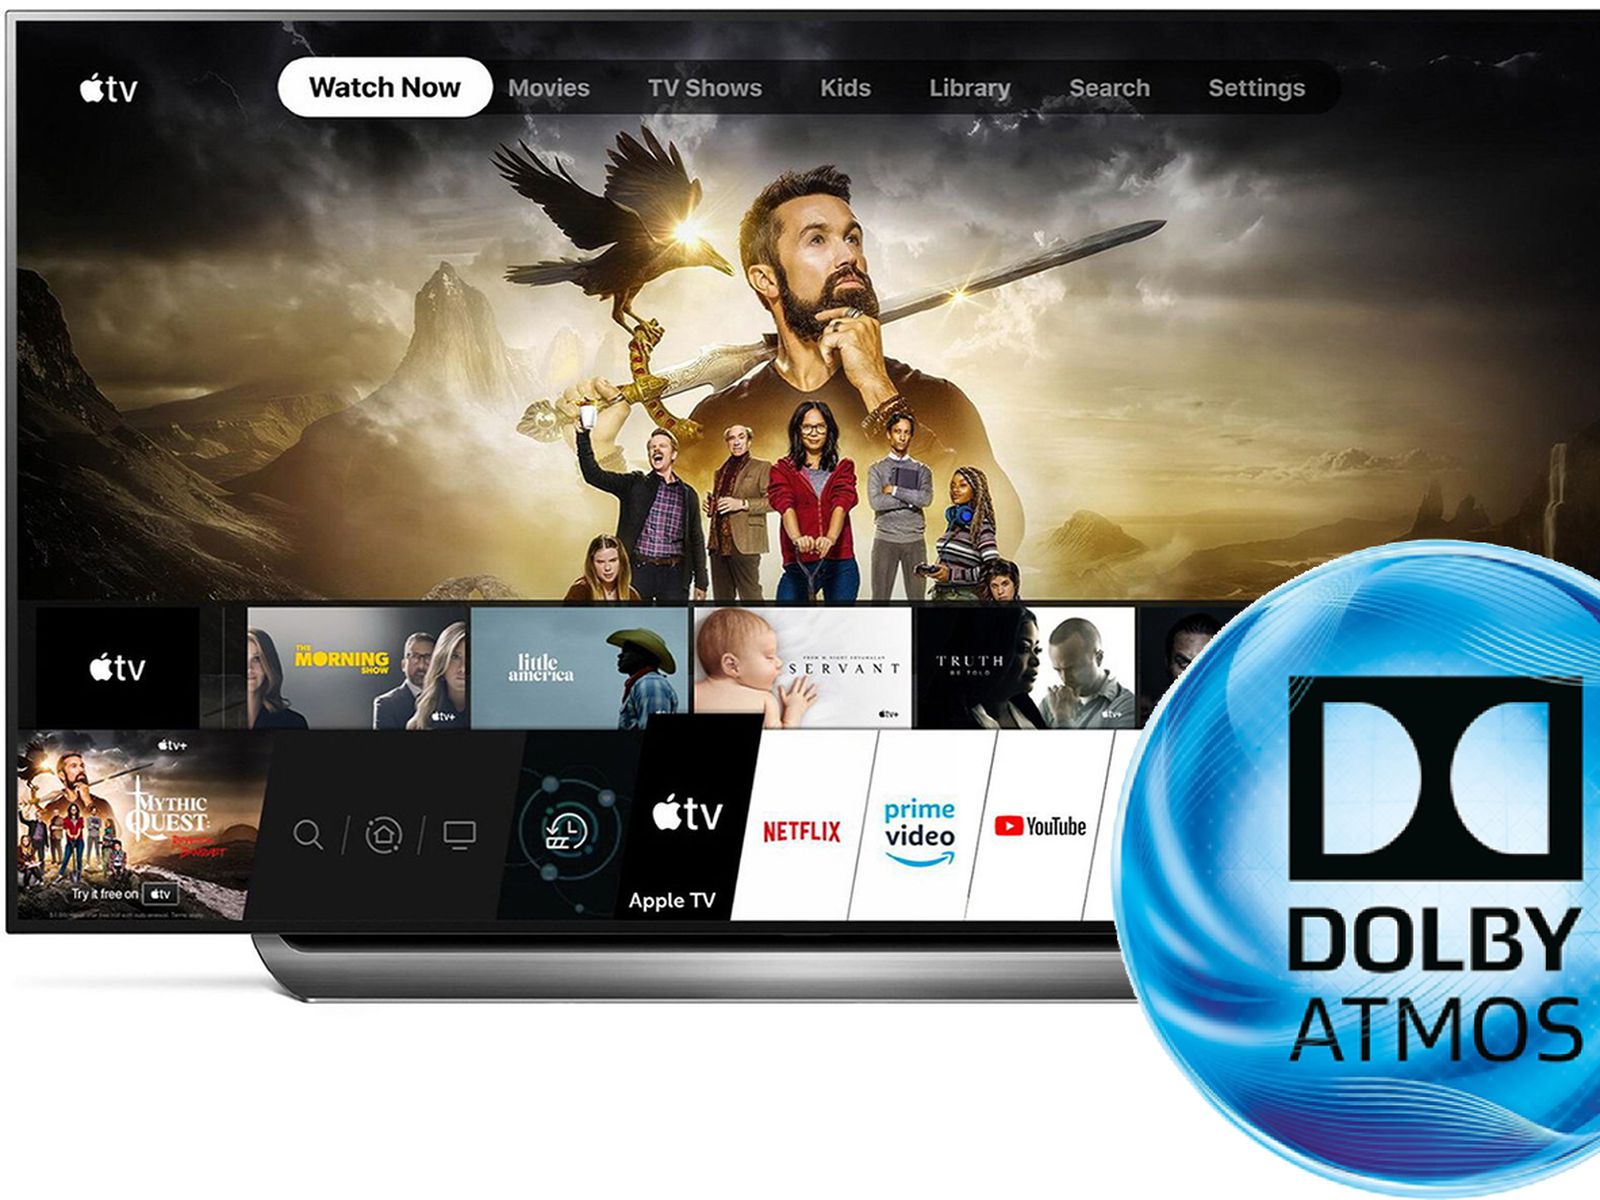 LG TVs Gain Dolby Atmos Support for Apple TV App - MacRumors